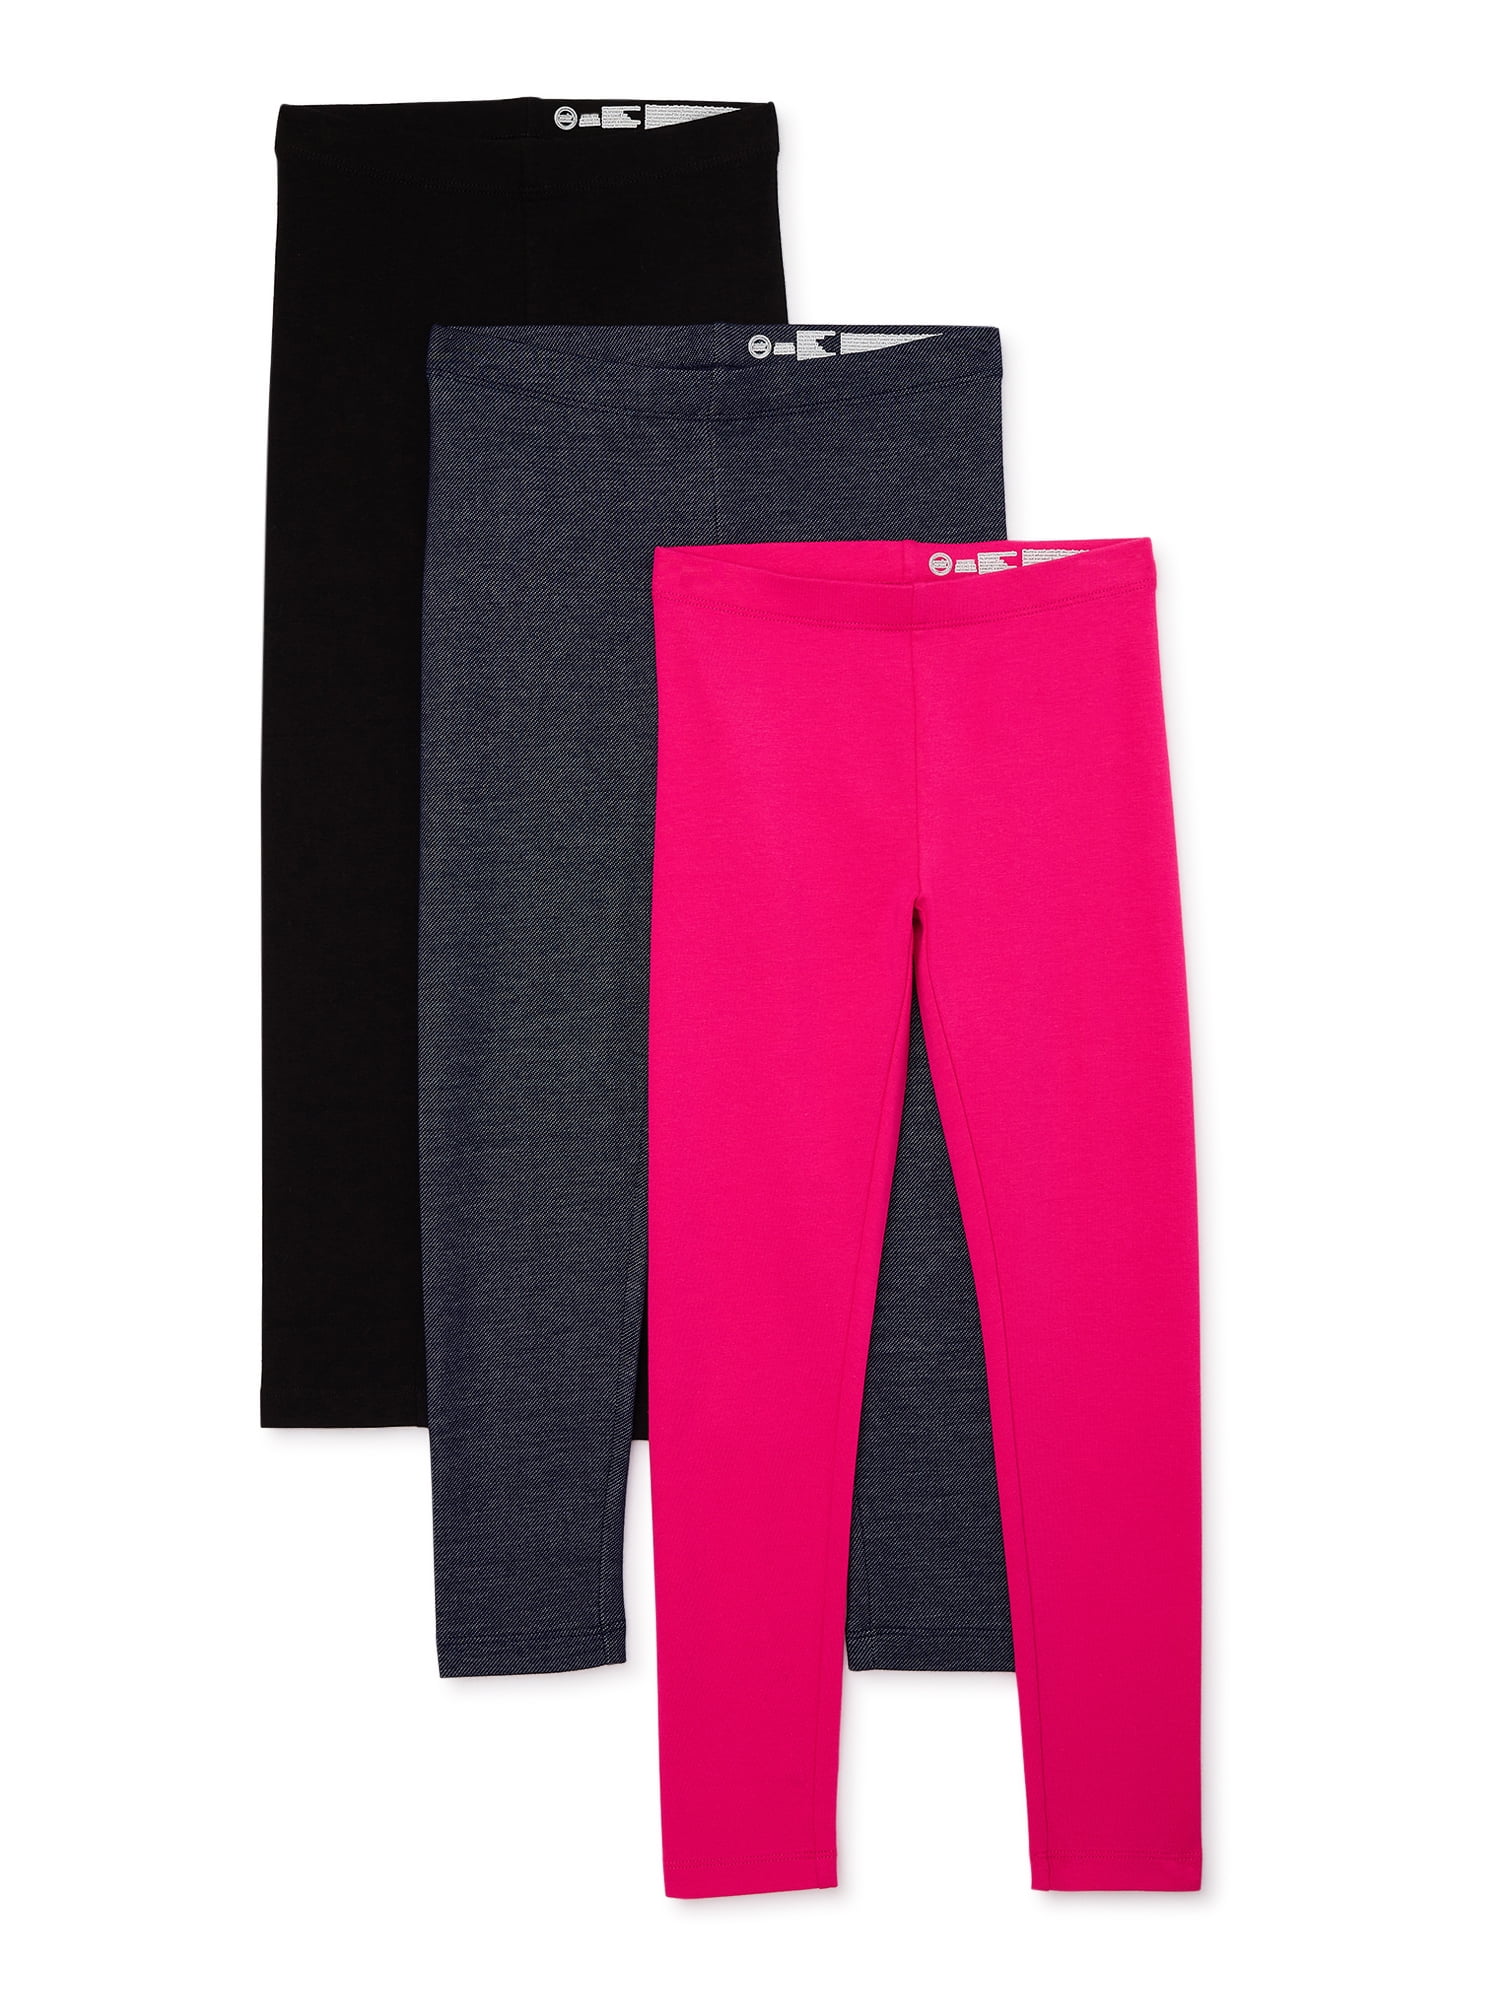 New Tek Gear Leggings Girl’s Size 14/16 Midrise Dark Turquoise w/ Pink